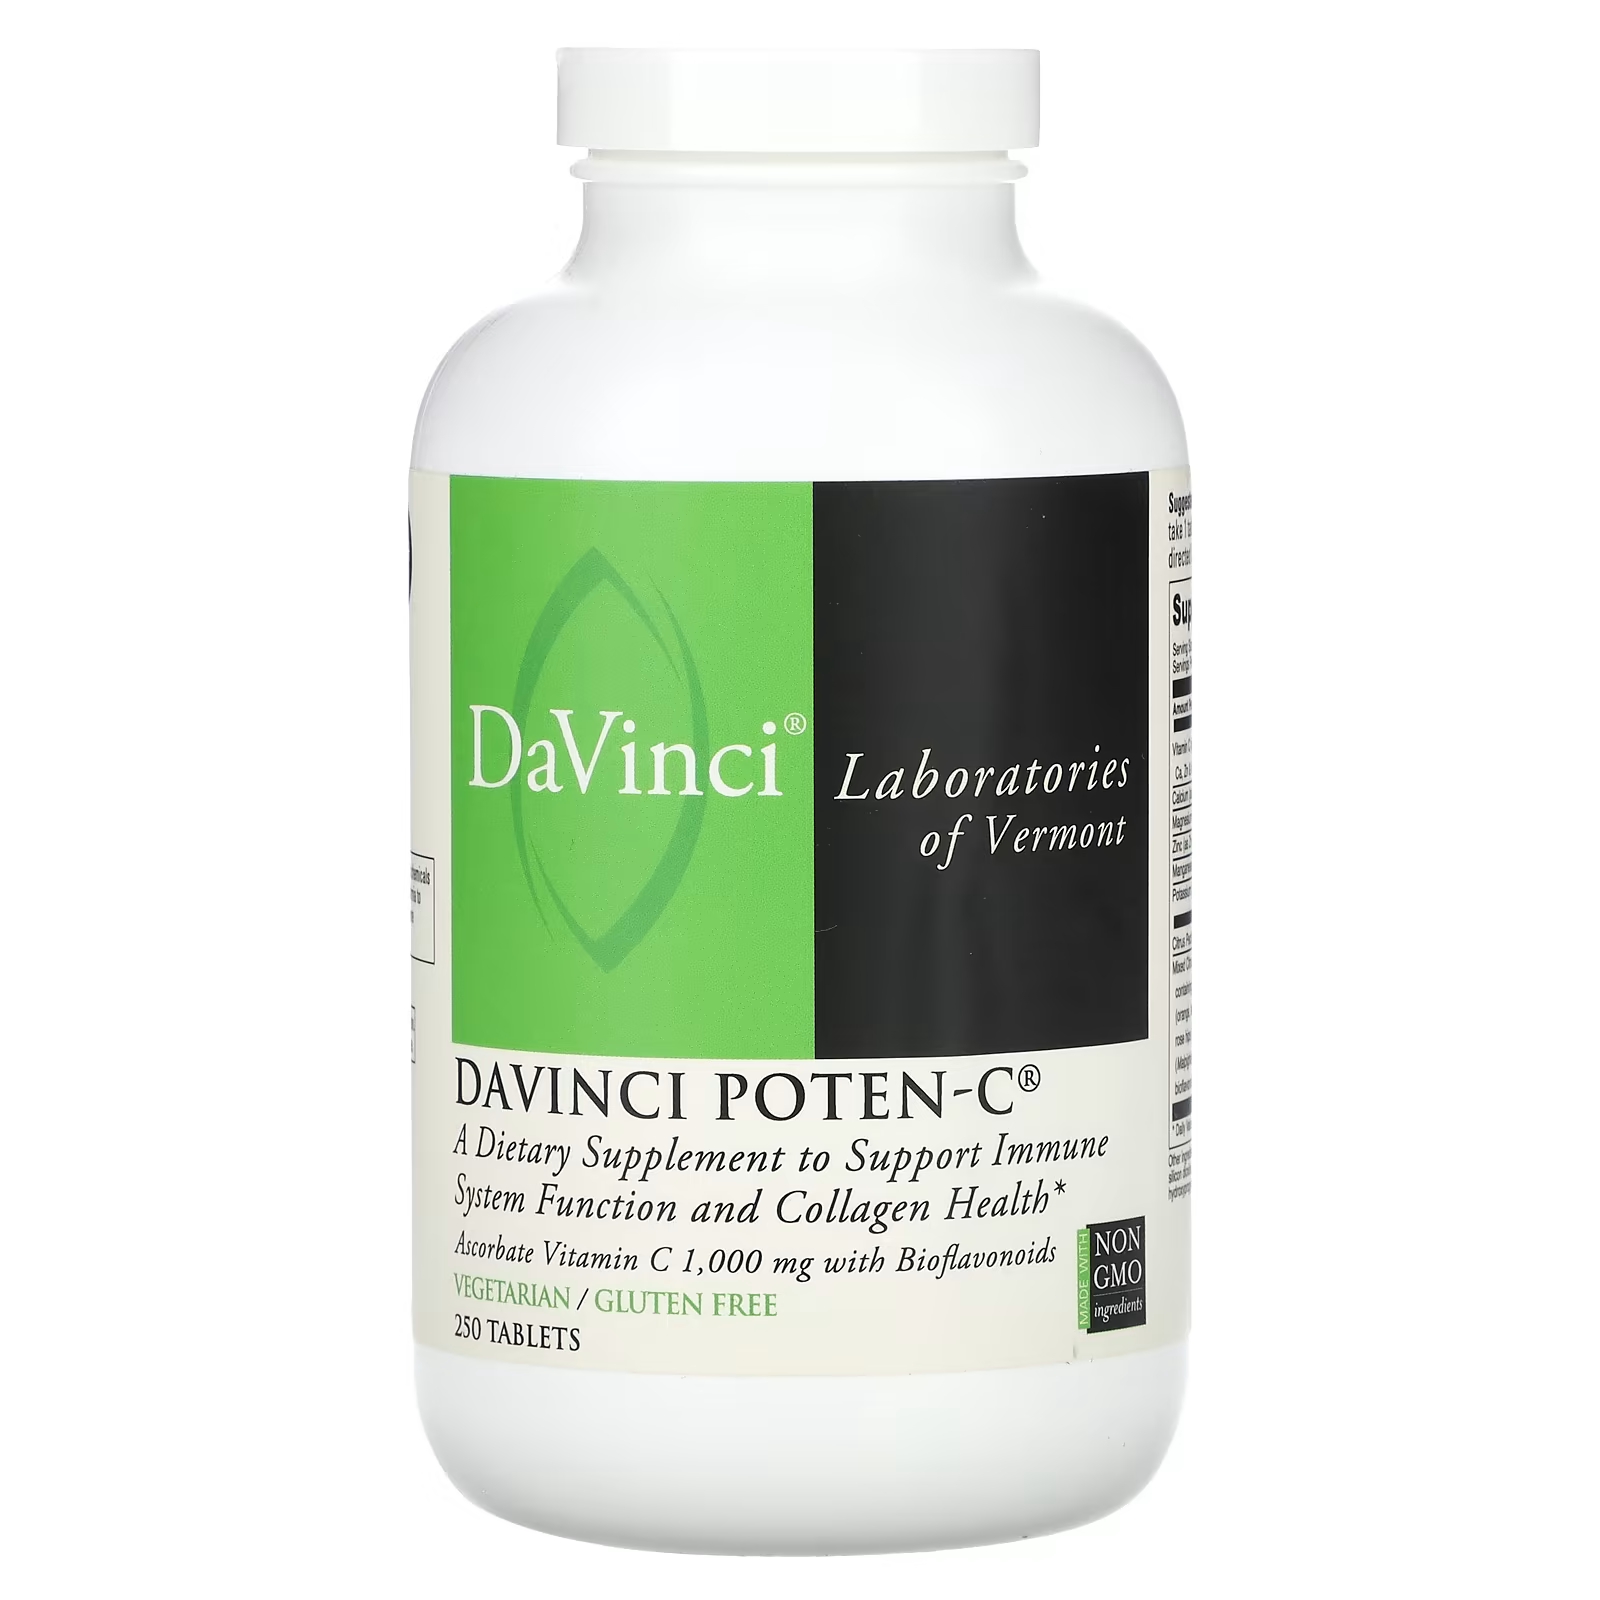 Пищевая добавка DaVinci Laboratories of Vermont Davinci Poten-C, 250 таблеток витамин c с биофлавоноидами solaray 1000 мг 250 капсул